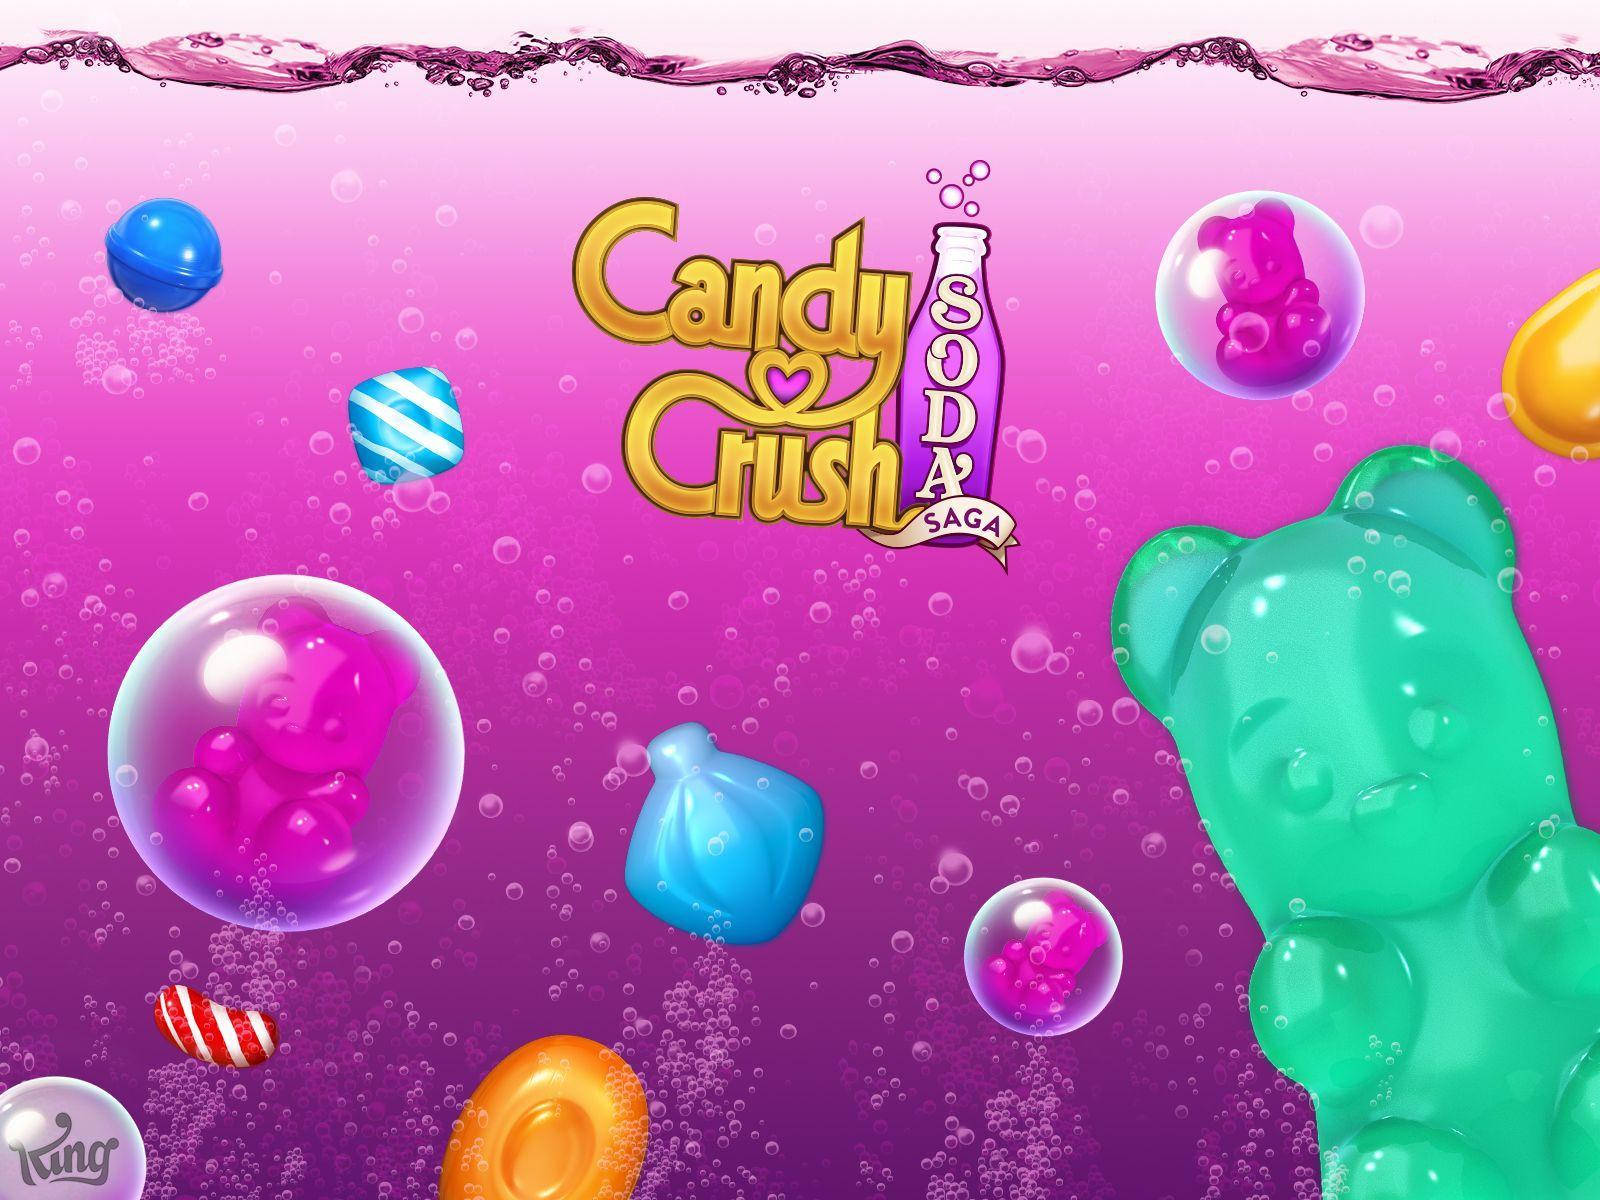 100+] Candy Crush Saga Backgrounds